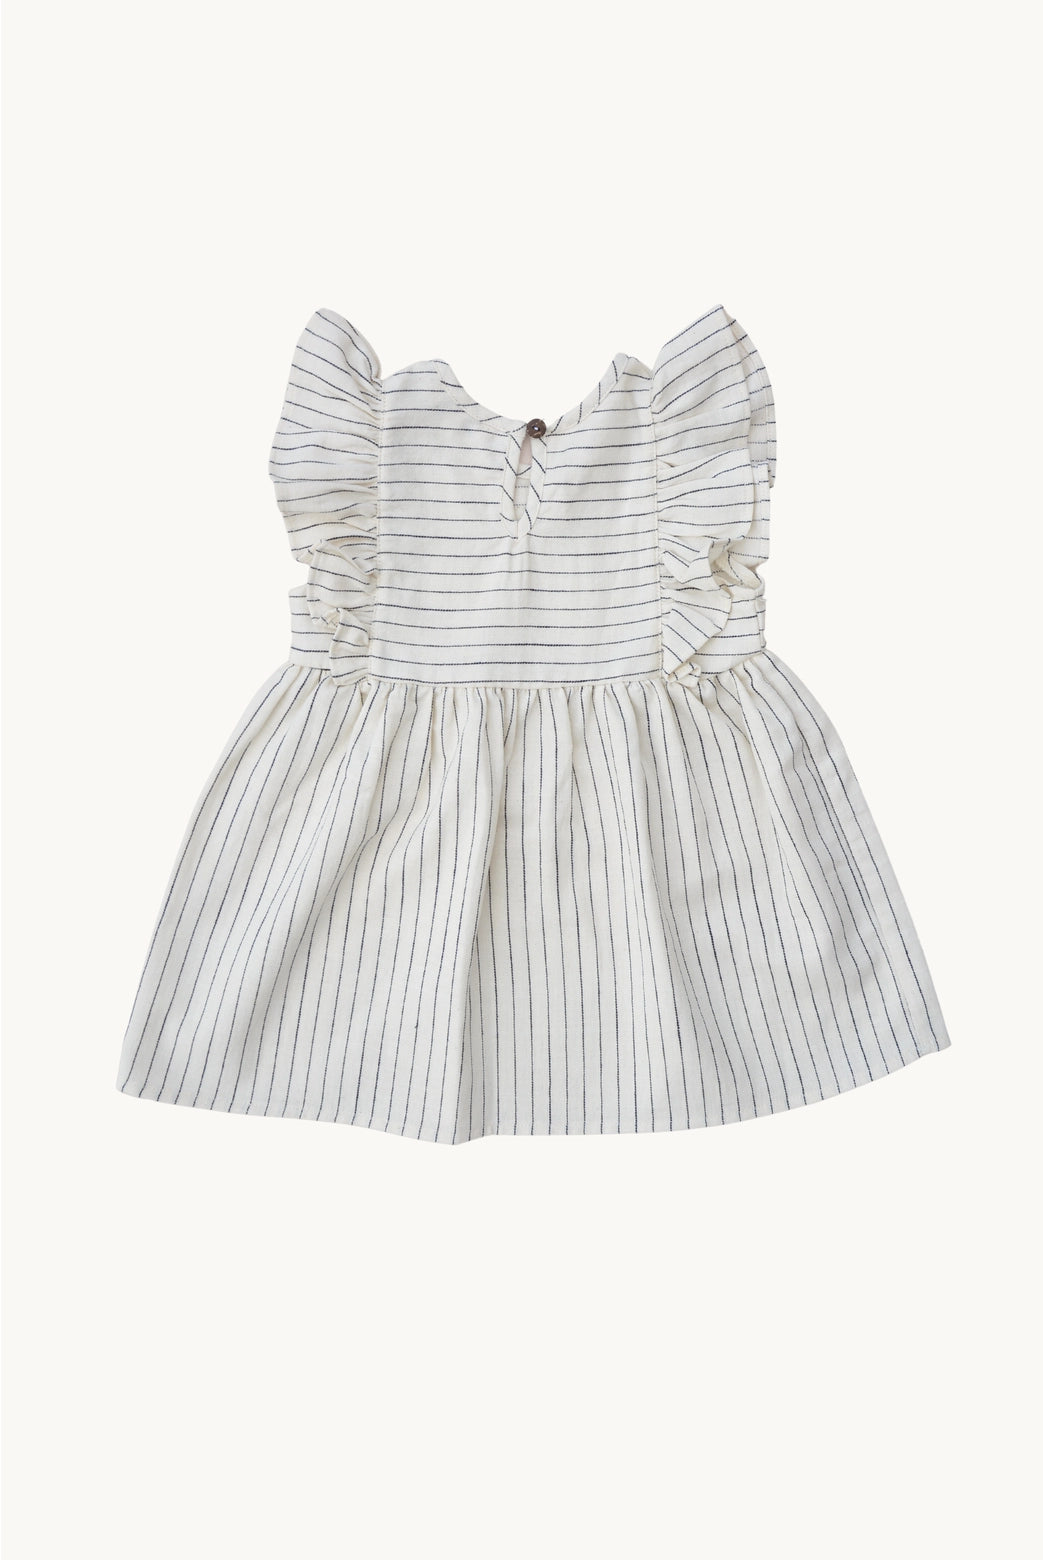 Eli & Nev Baby Girl Dina Summer Dress - Stripes (100% Cotton)